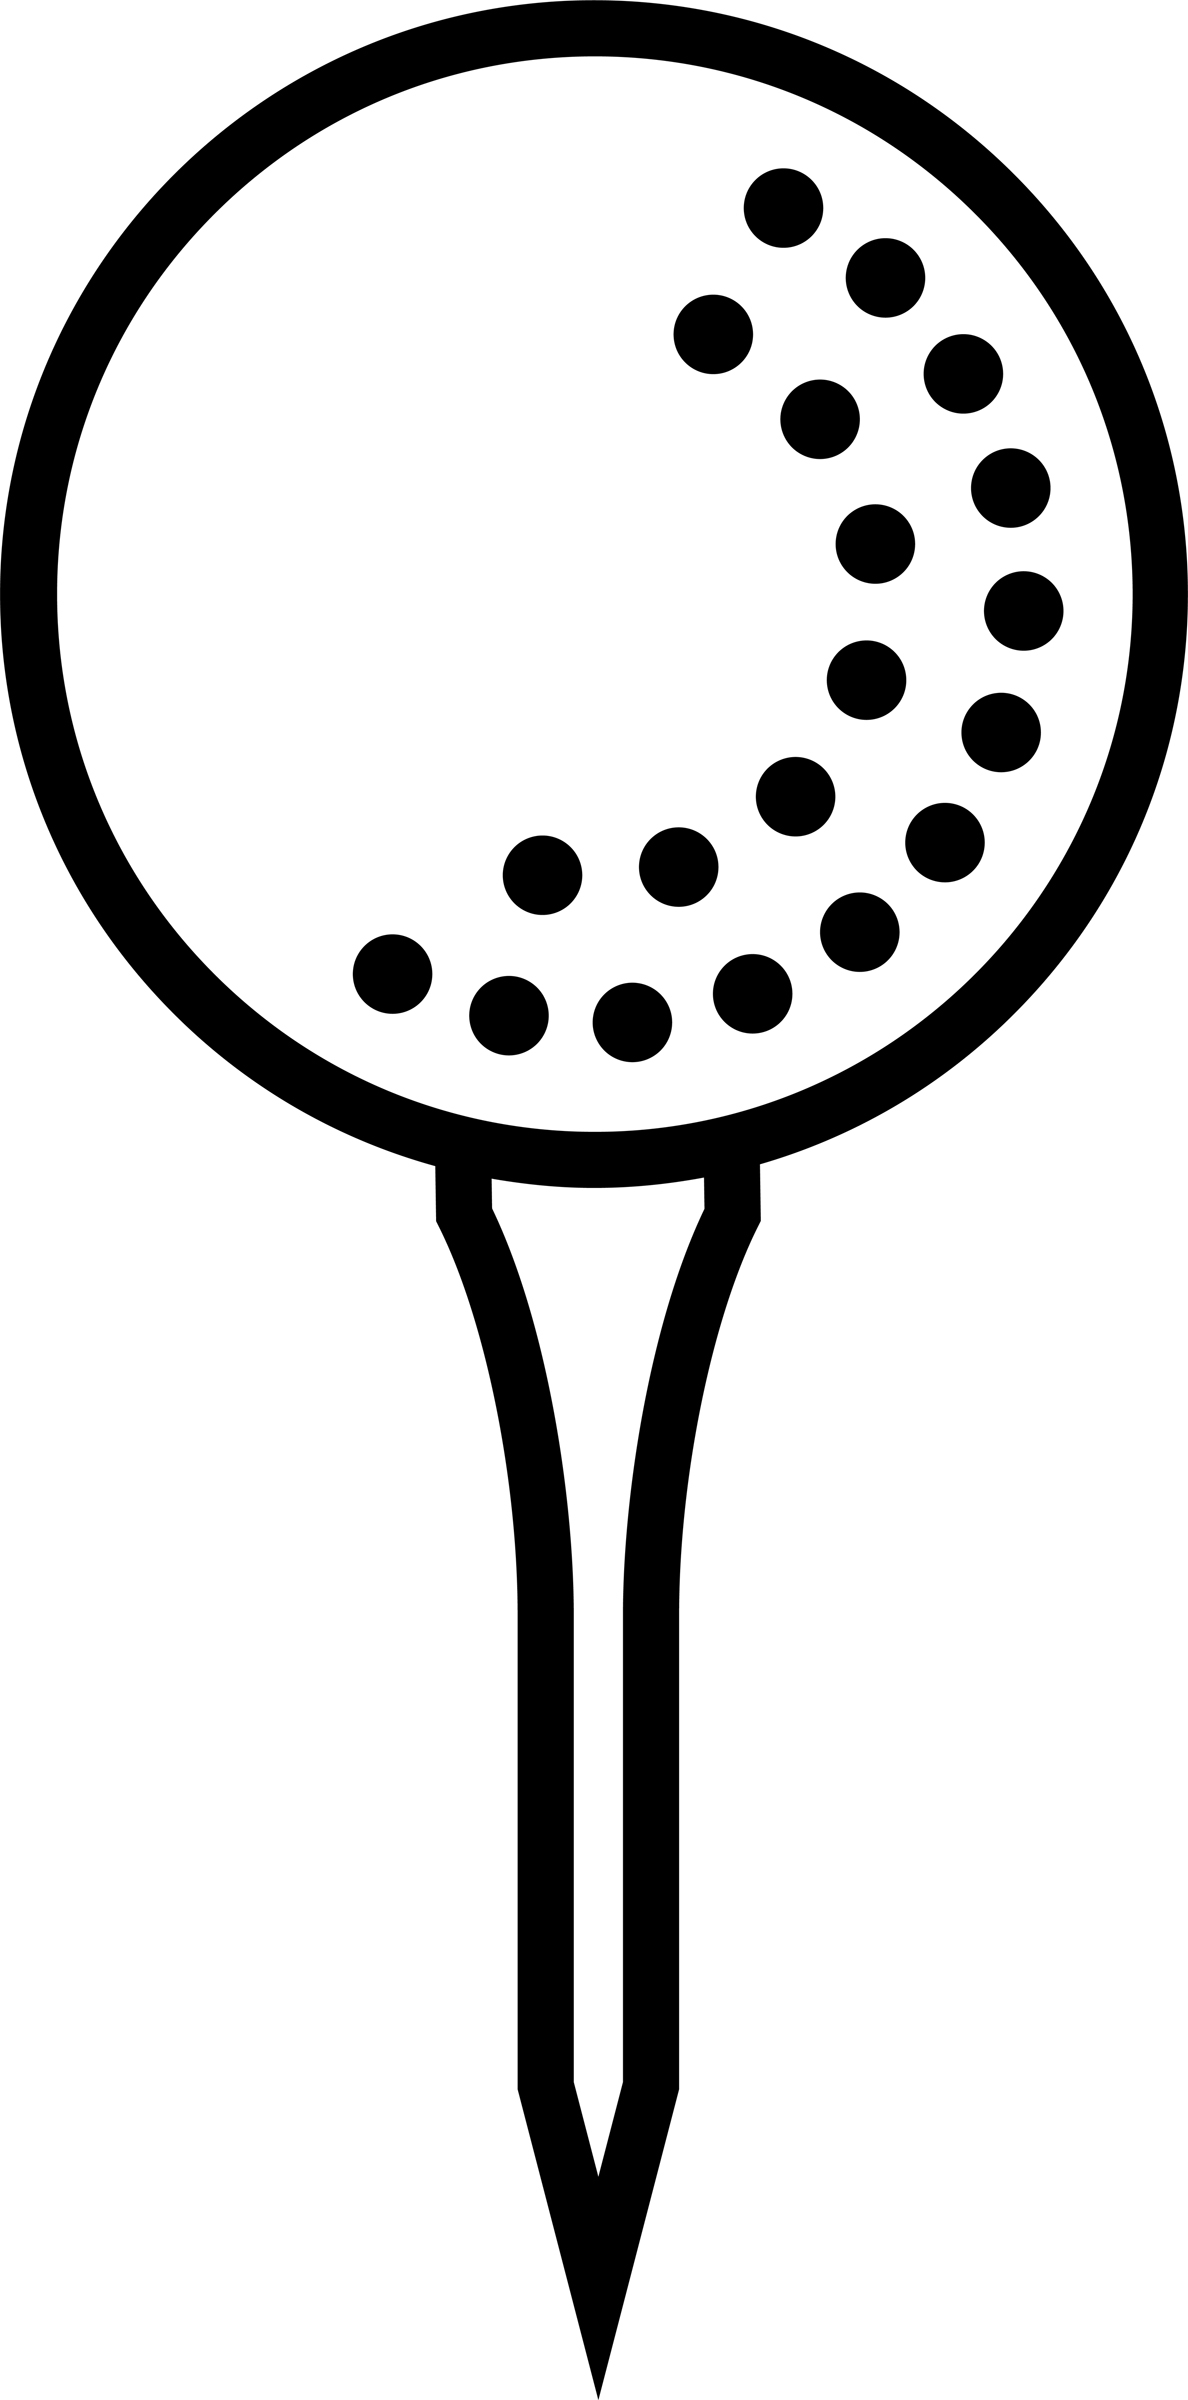 Free golf ball clip art